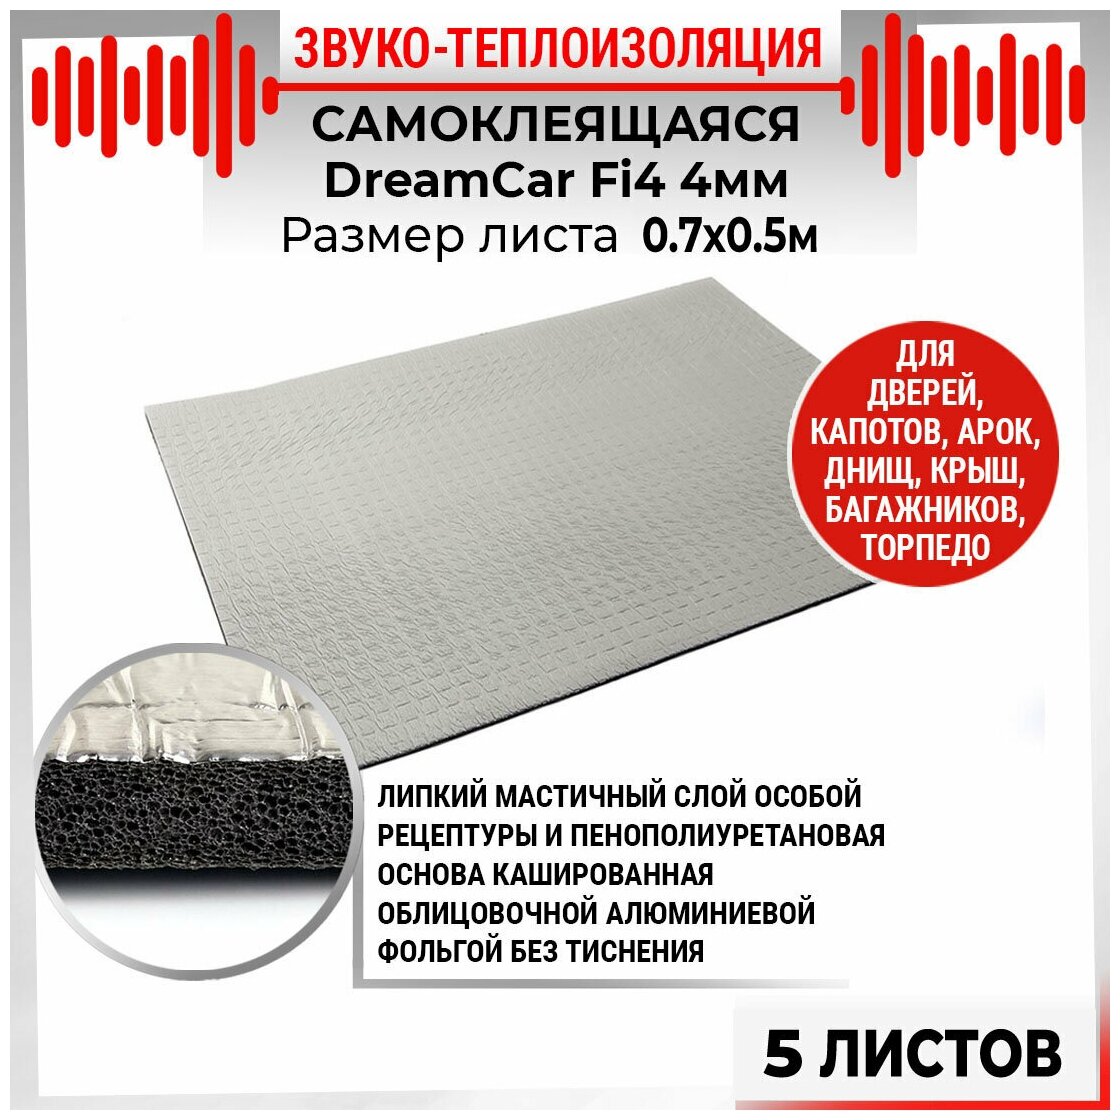 DreamCar Technology 5 листов - Звуко-Теплоизоляция самоклеящаяся DreamCar Fi4 4мм 0.68х0.5м - 5 листов